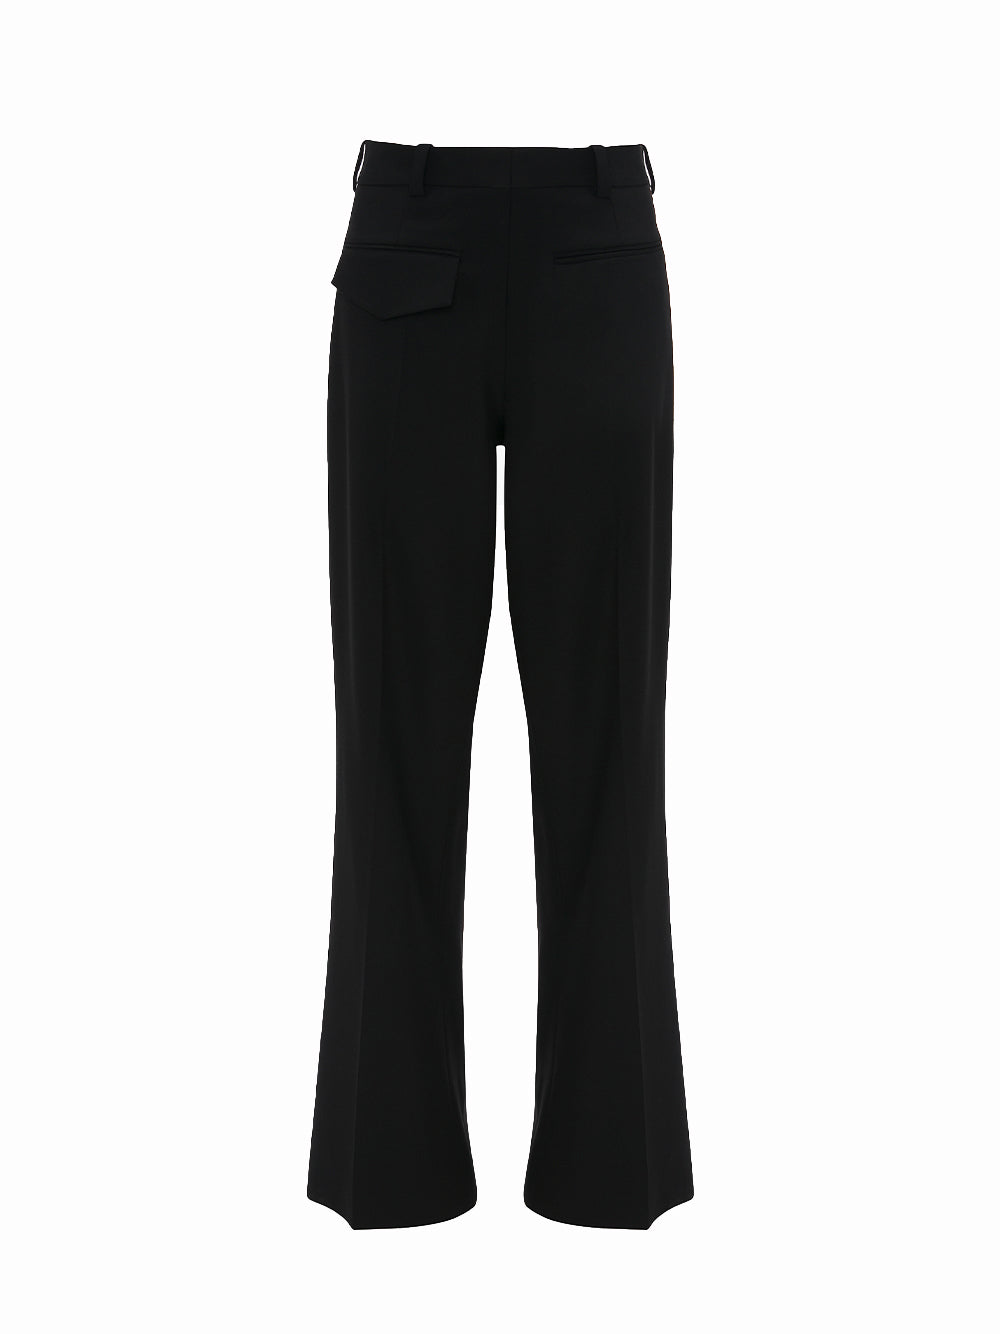 Reverse Front Trouser (Black)